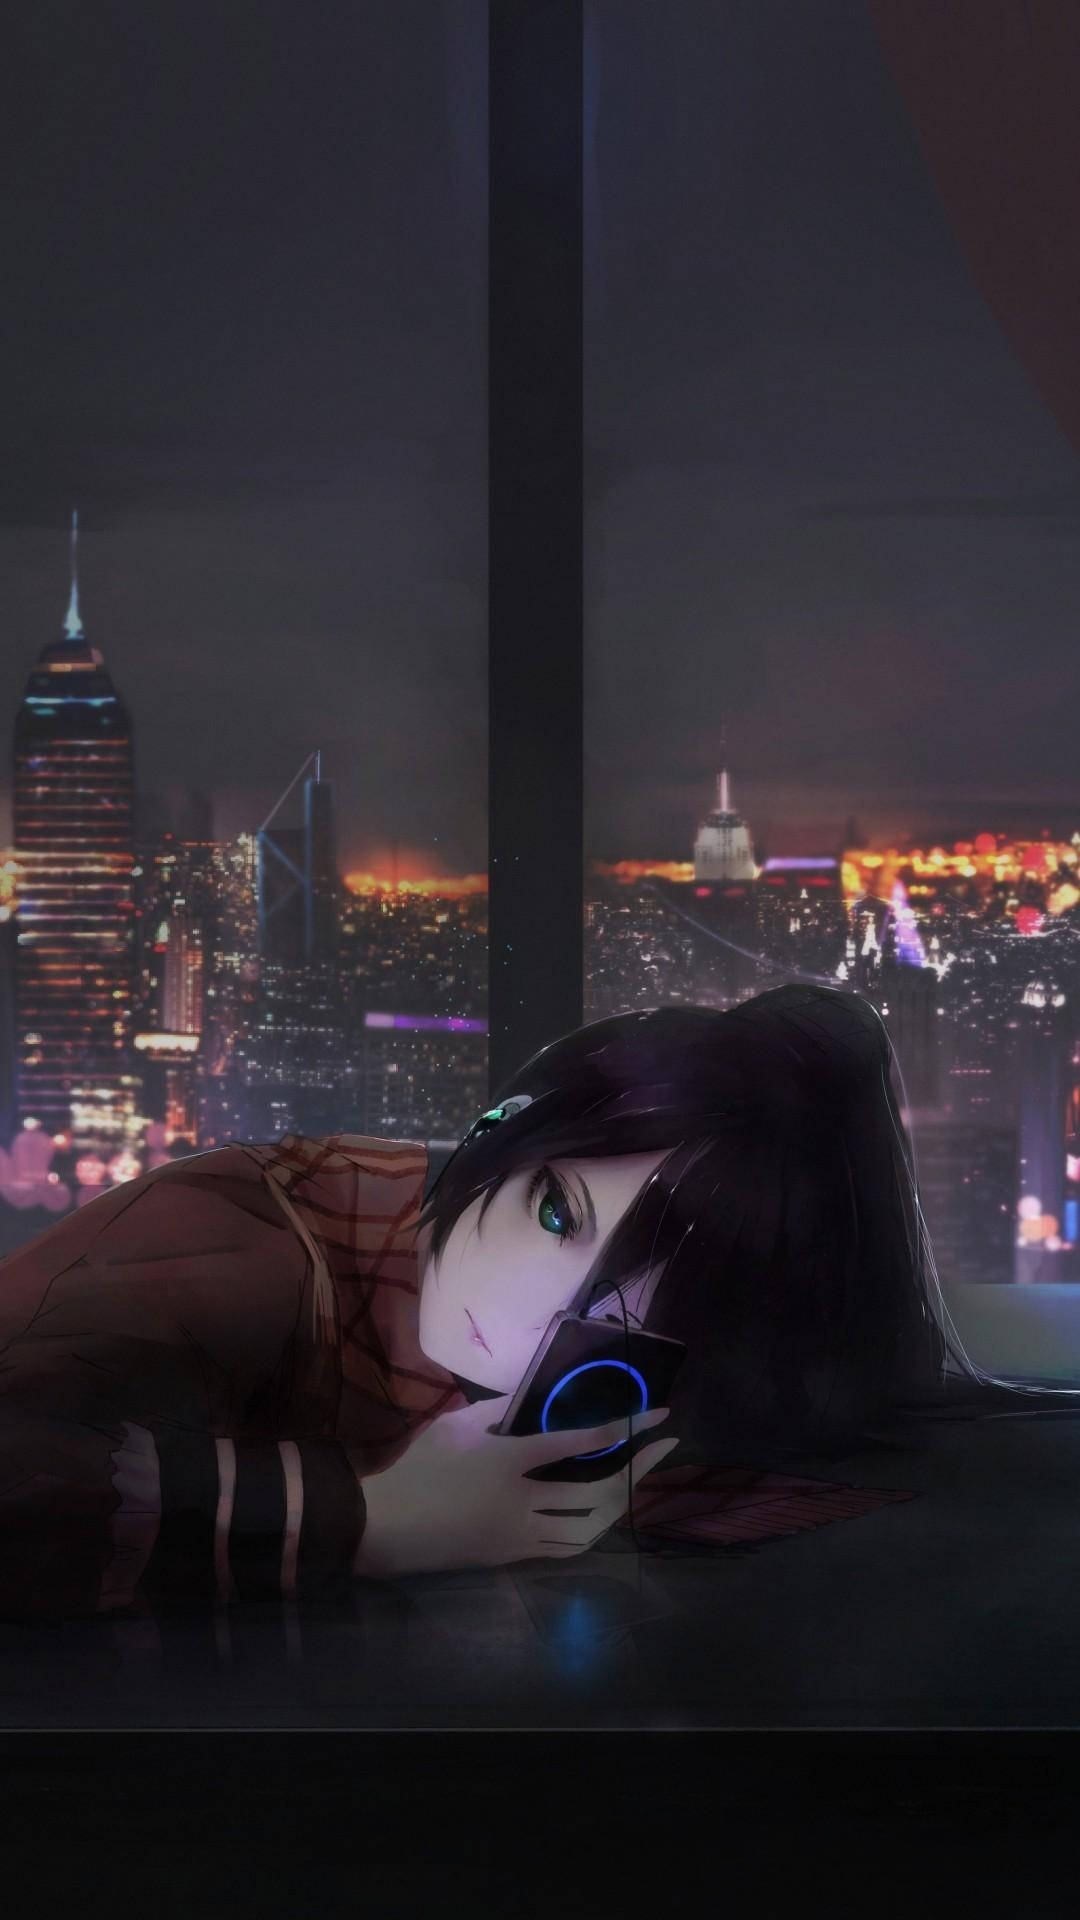 Anime Girl Sad Alone Using Phone On Desk